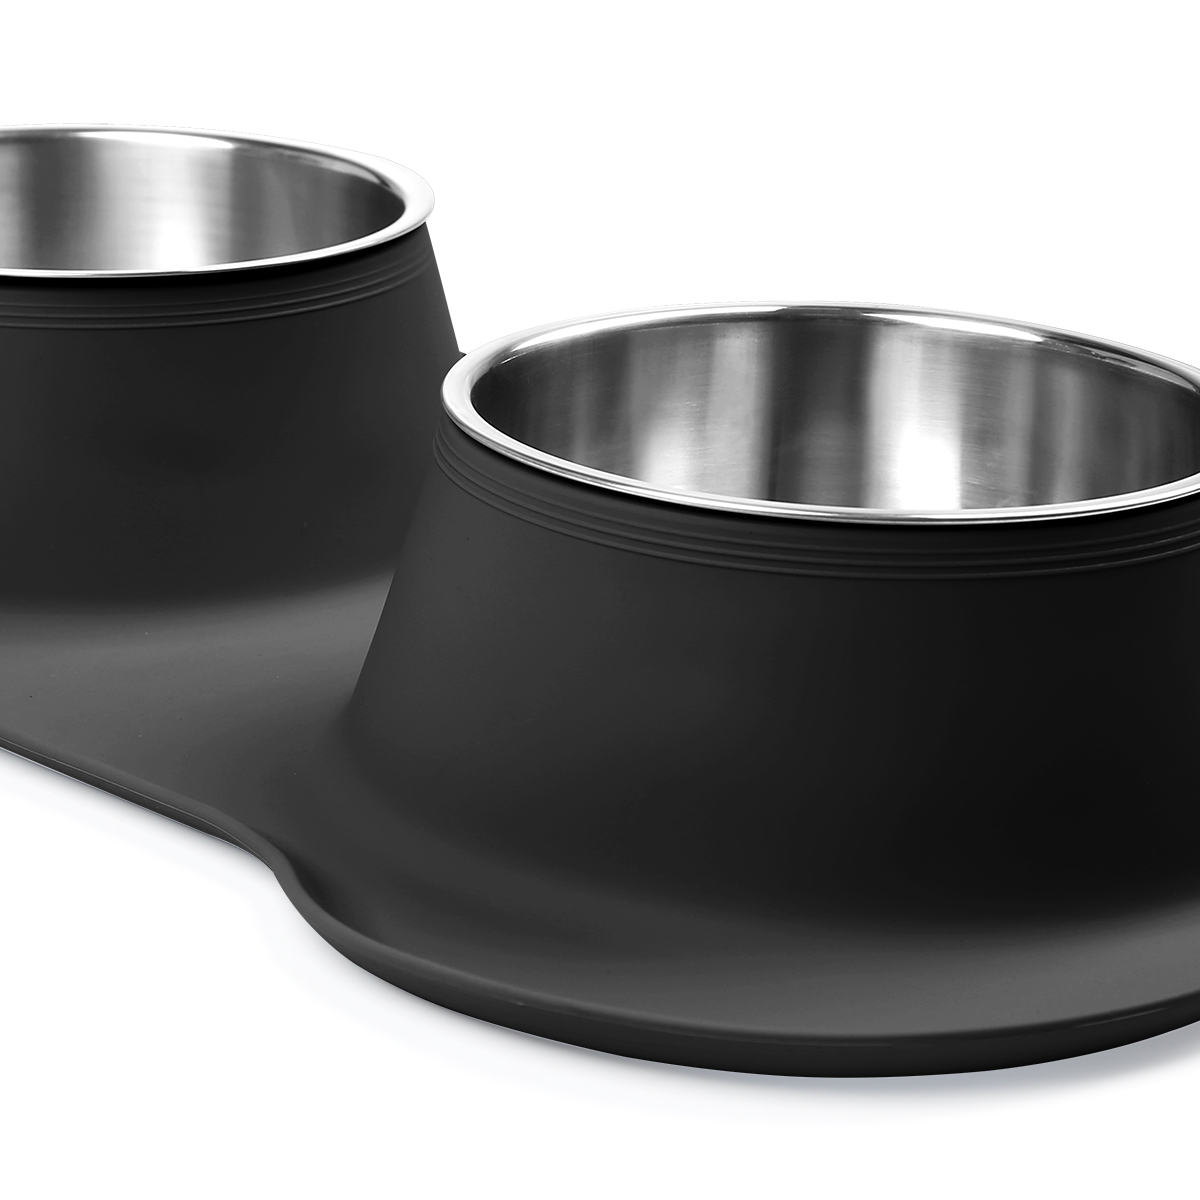 URPOWER 53 oz Stainless Steel Dog Bowls